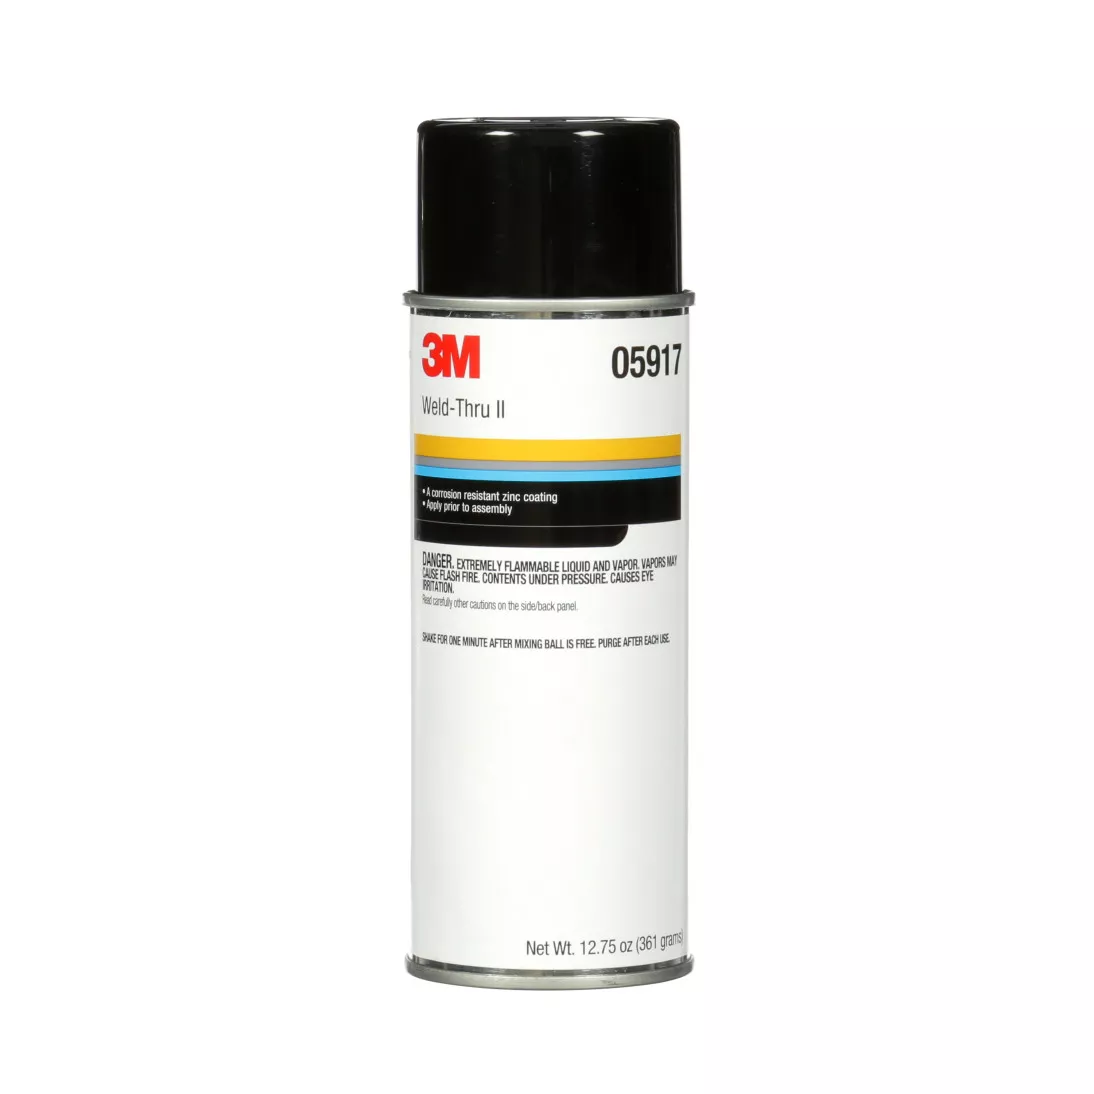 Anti-corrosion Sprays